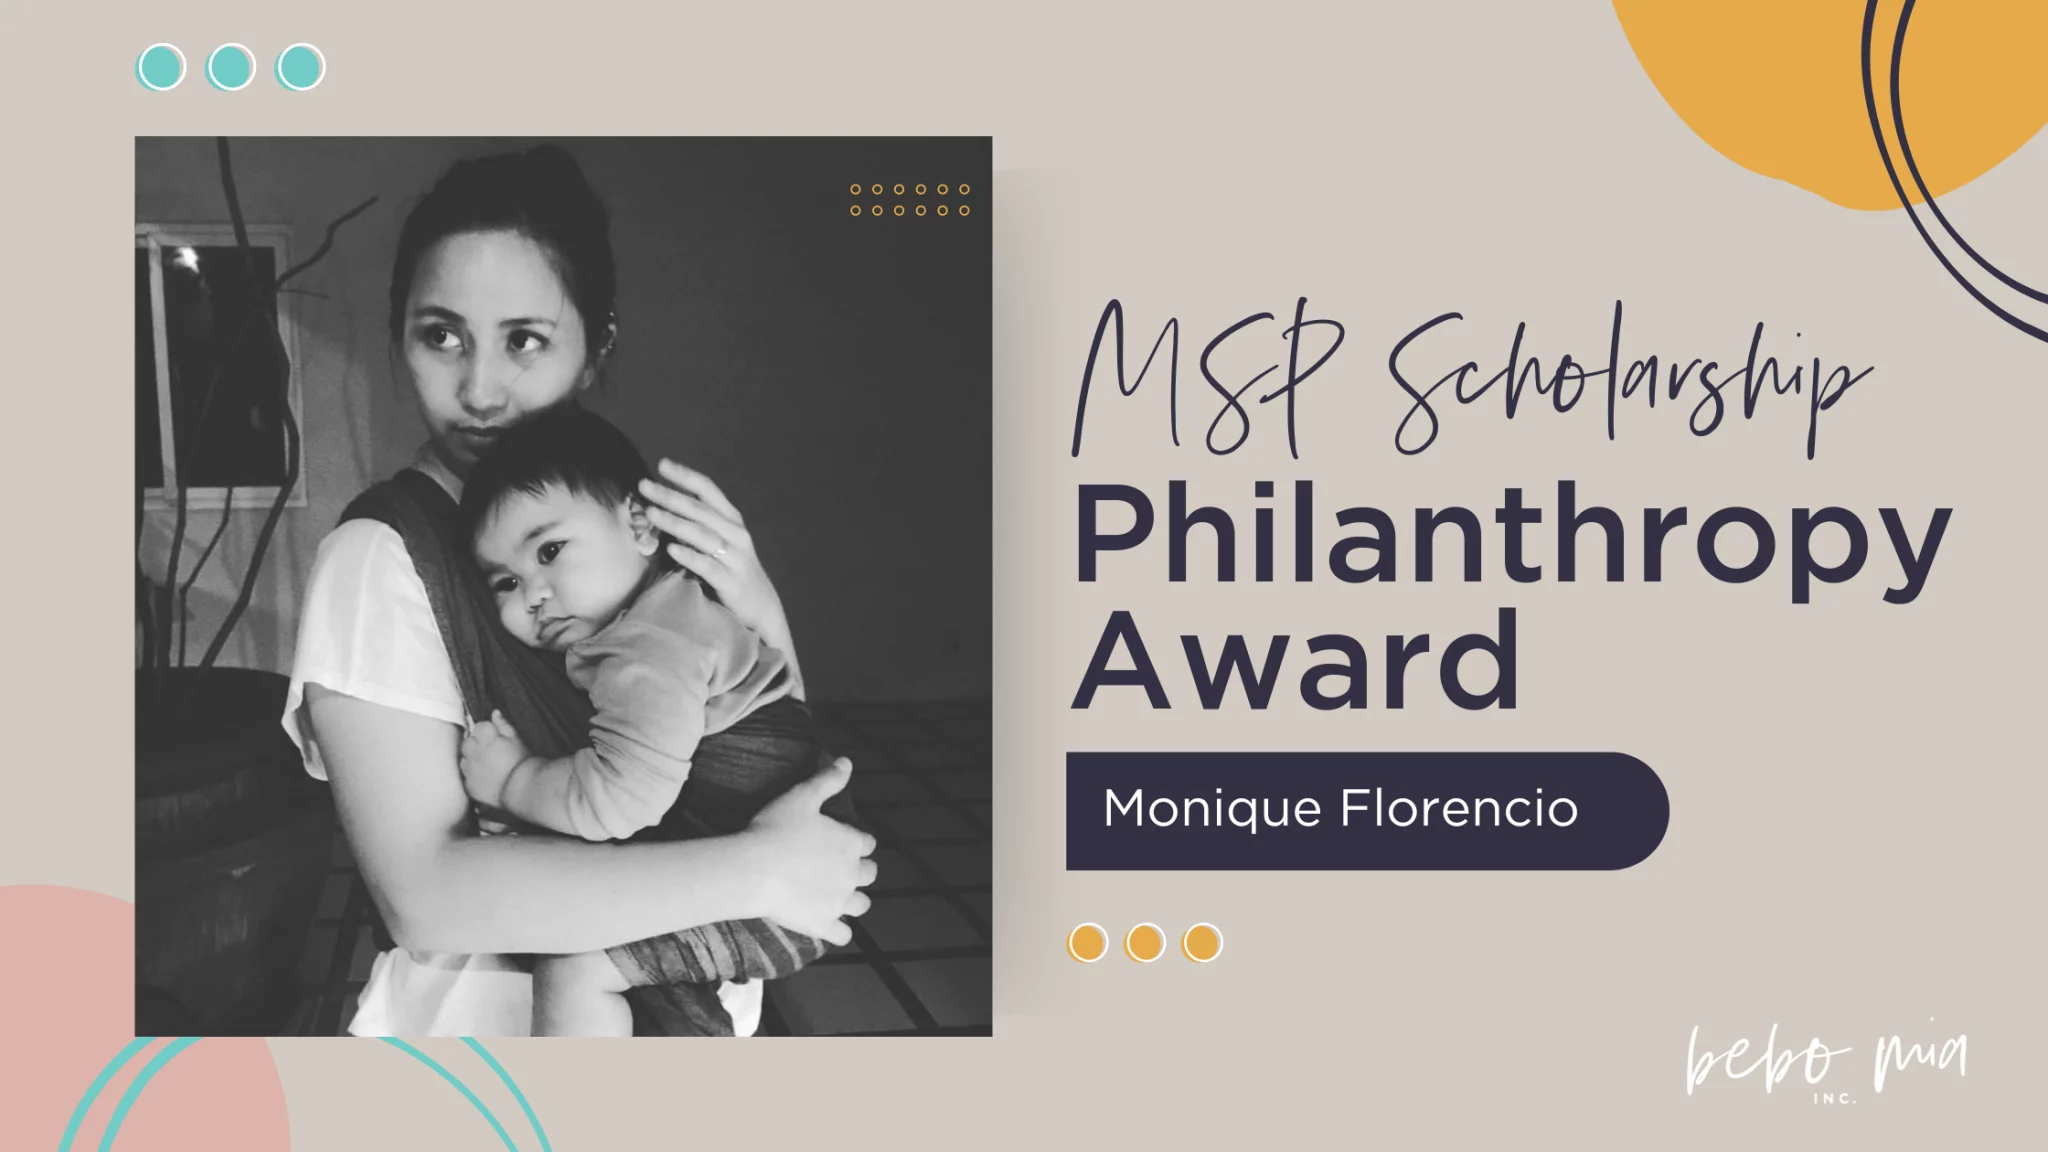 Monique Florencio - "Philanthropy" Award Doula Training Scholarship Winner March 2022